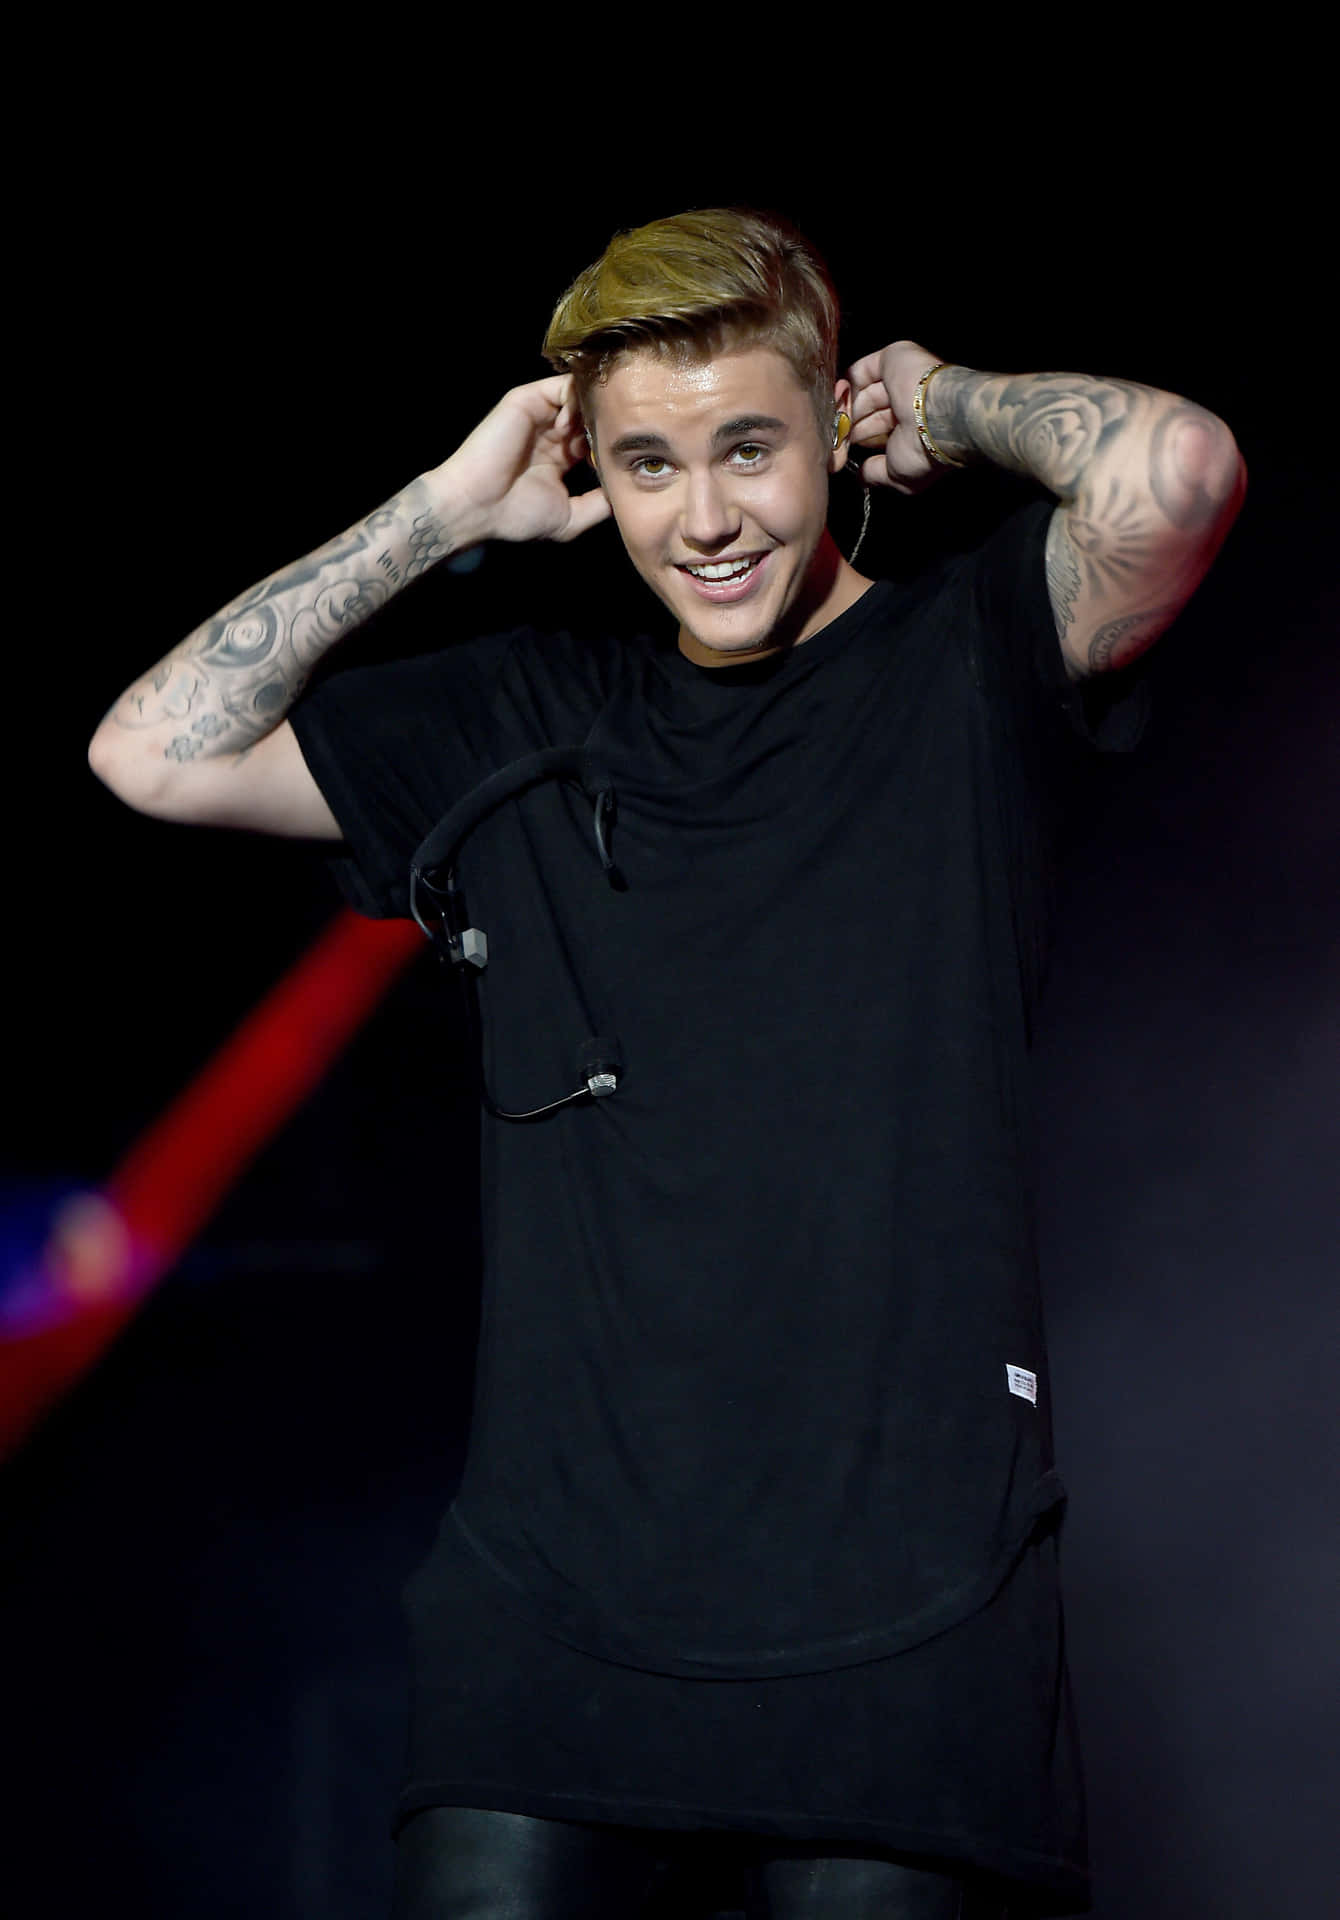 Smiling Justin Bieber 2015